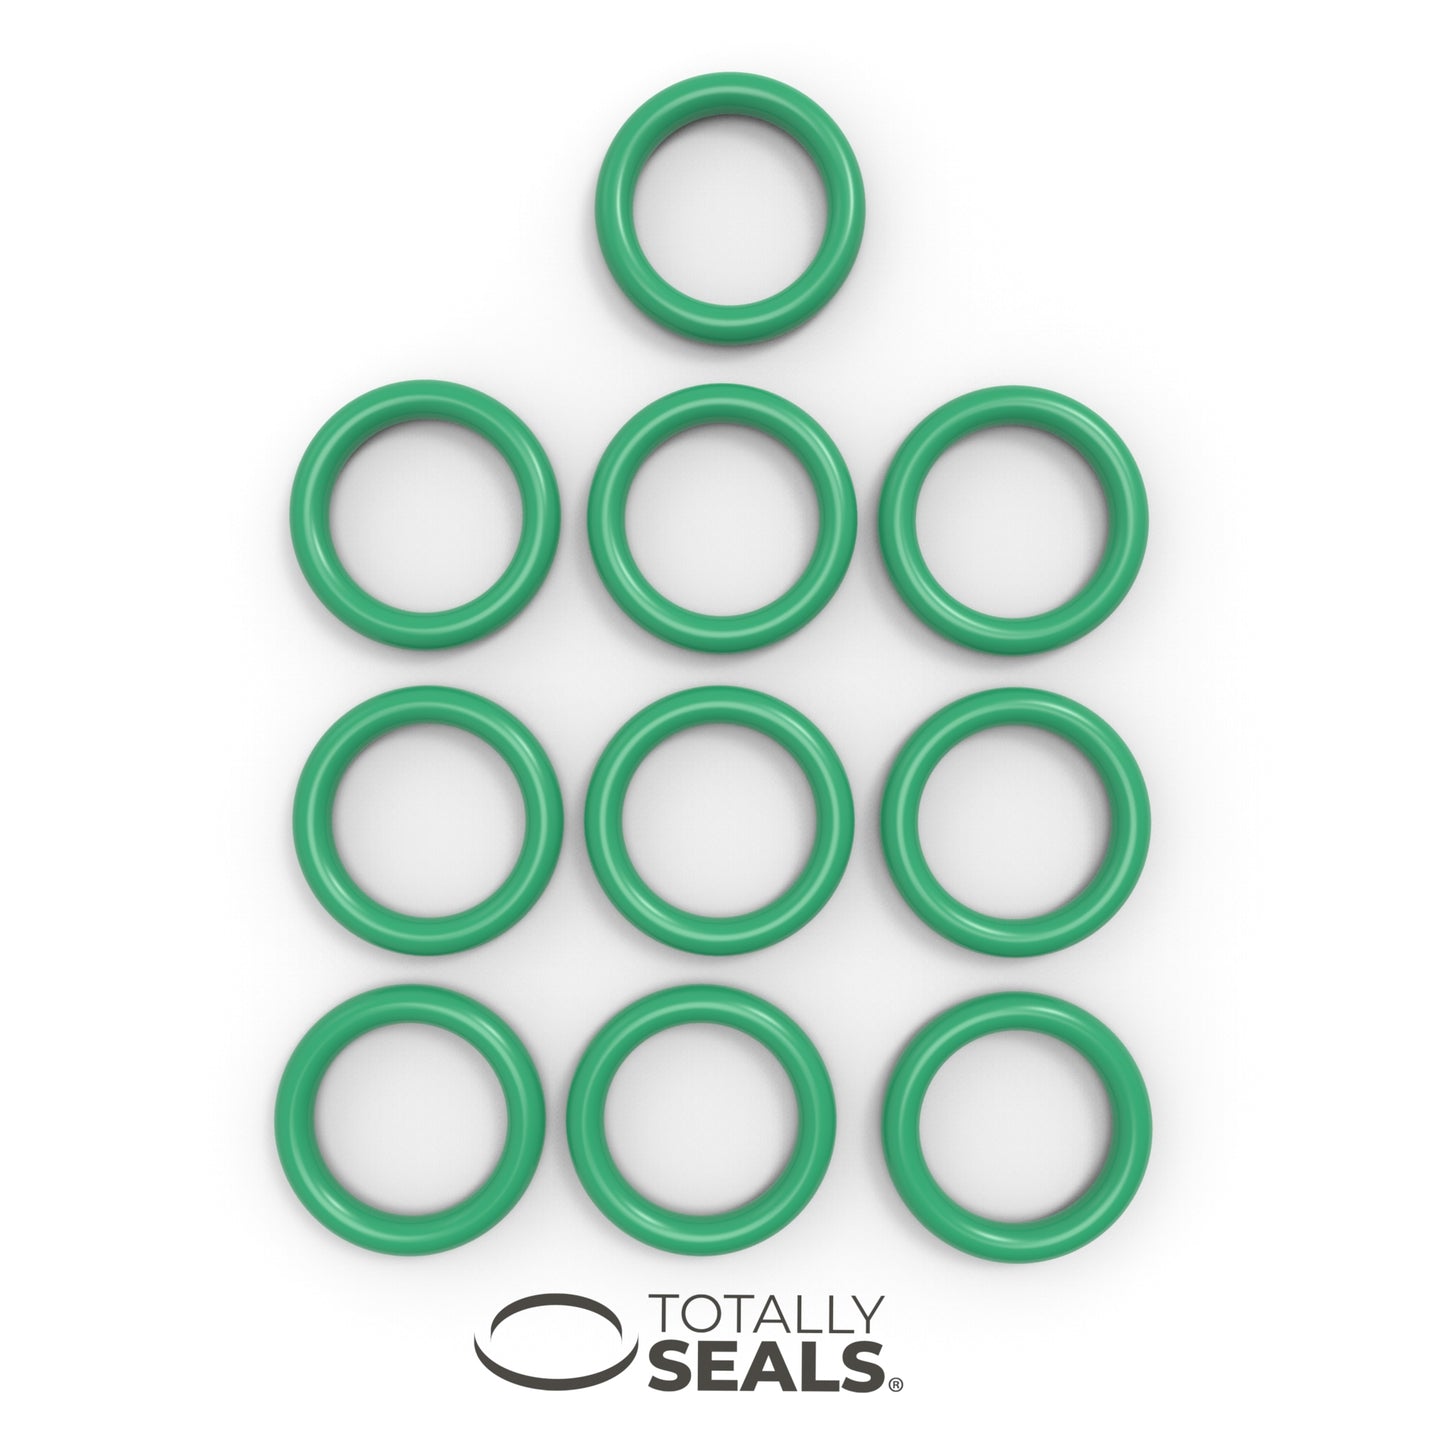 14mm x 2.5mm (19mm OD) FKM (Viton™) O-Rings - Totally Seals®